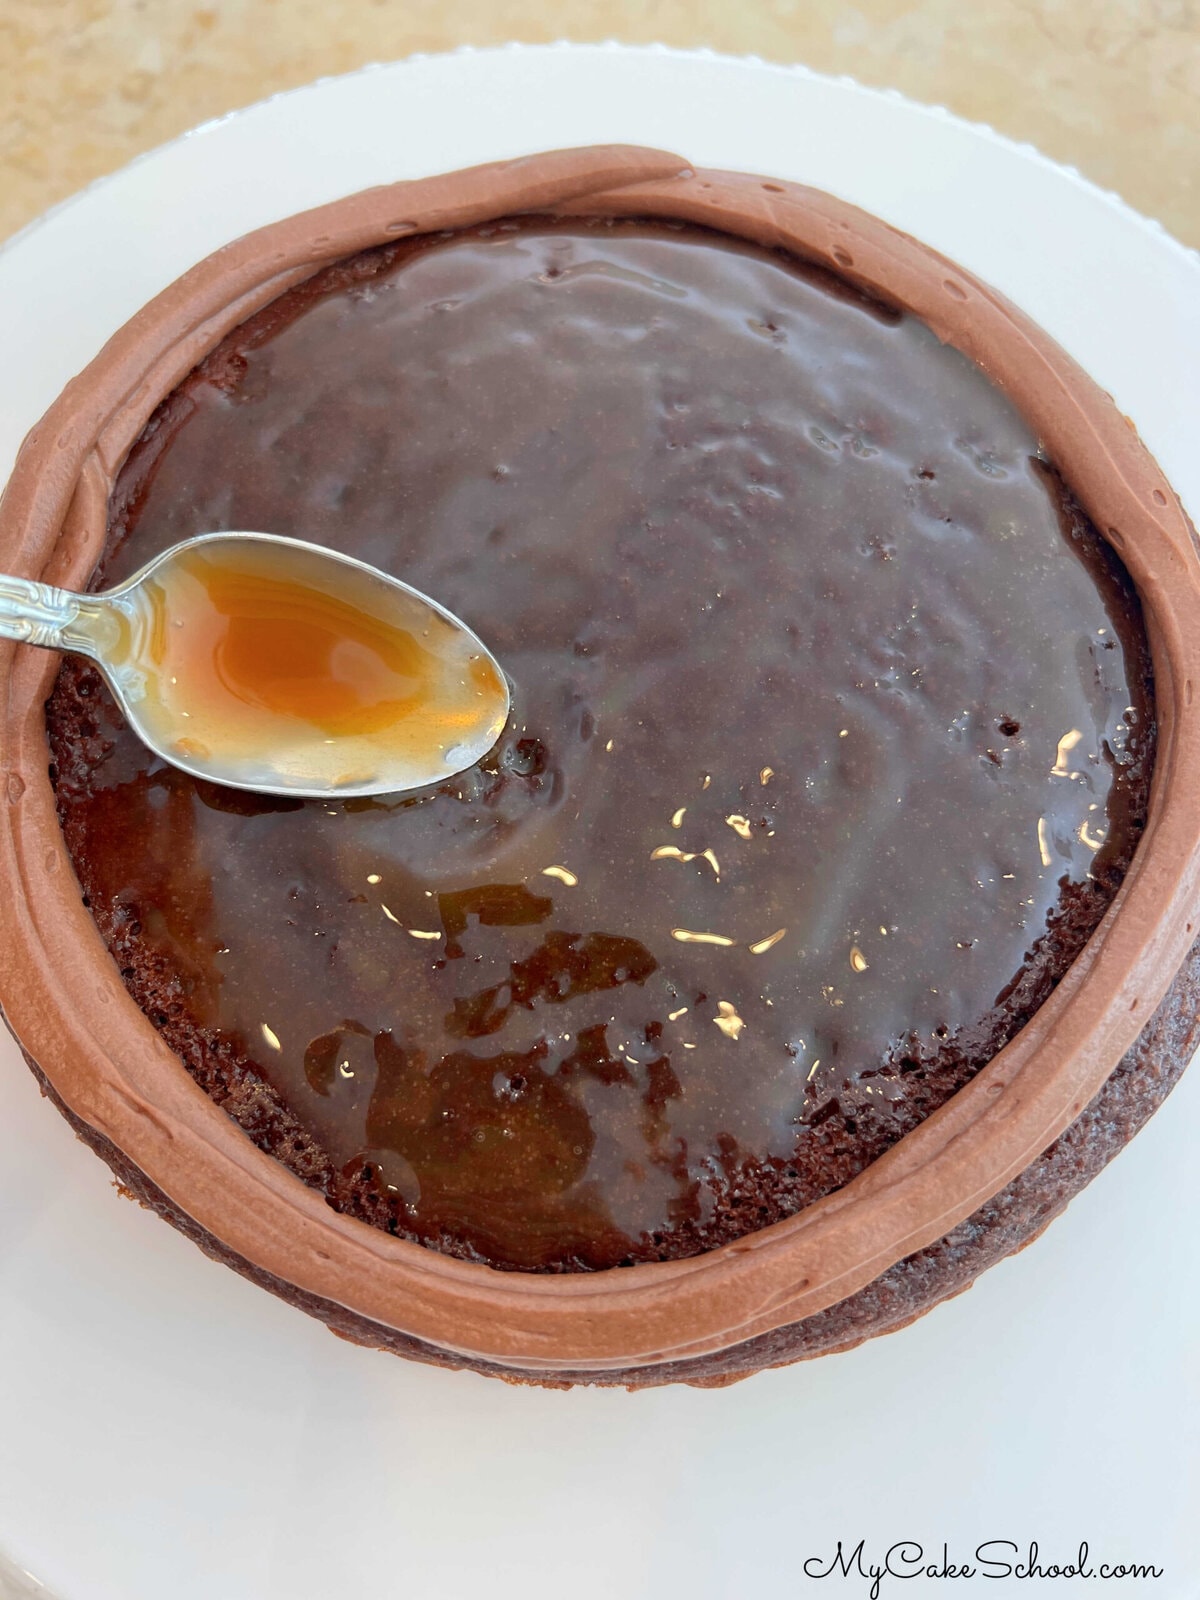 Spreading a thin glaze of caramel sauce over the chocolate cake layer. (Layer has chocolate buttercream dam.)